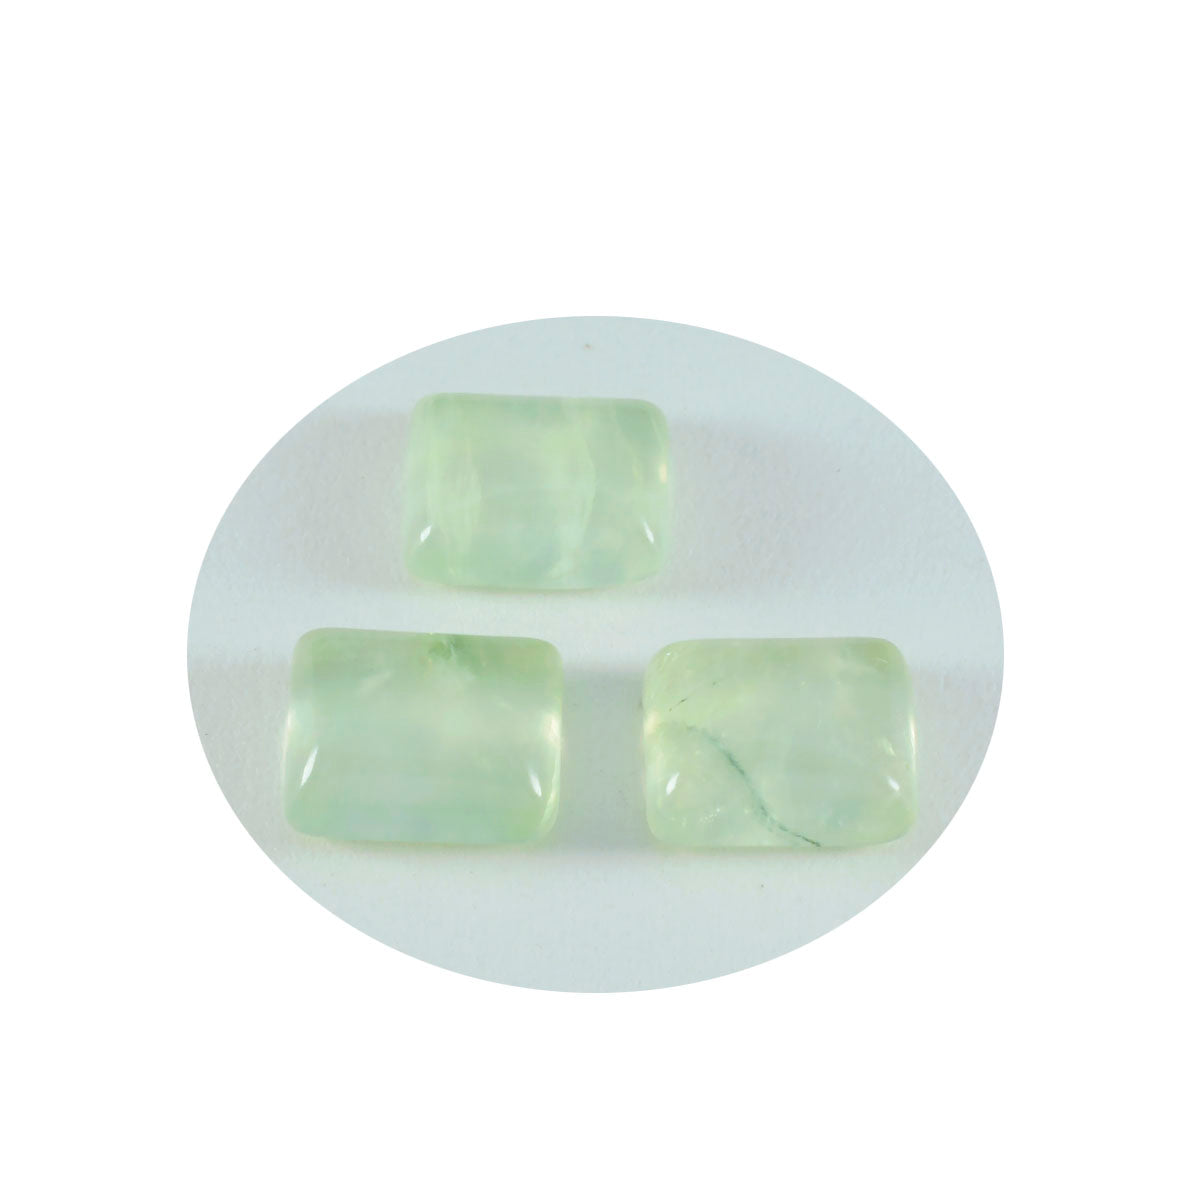 riyogems 1 st grön prehnite cabochon 9x11 mm oktagonform a+1 kvalitetssten